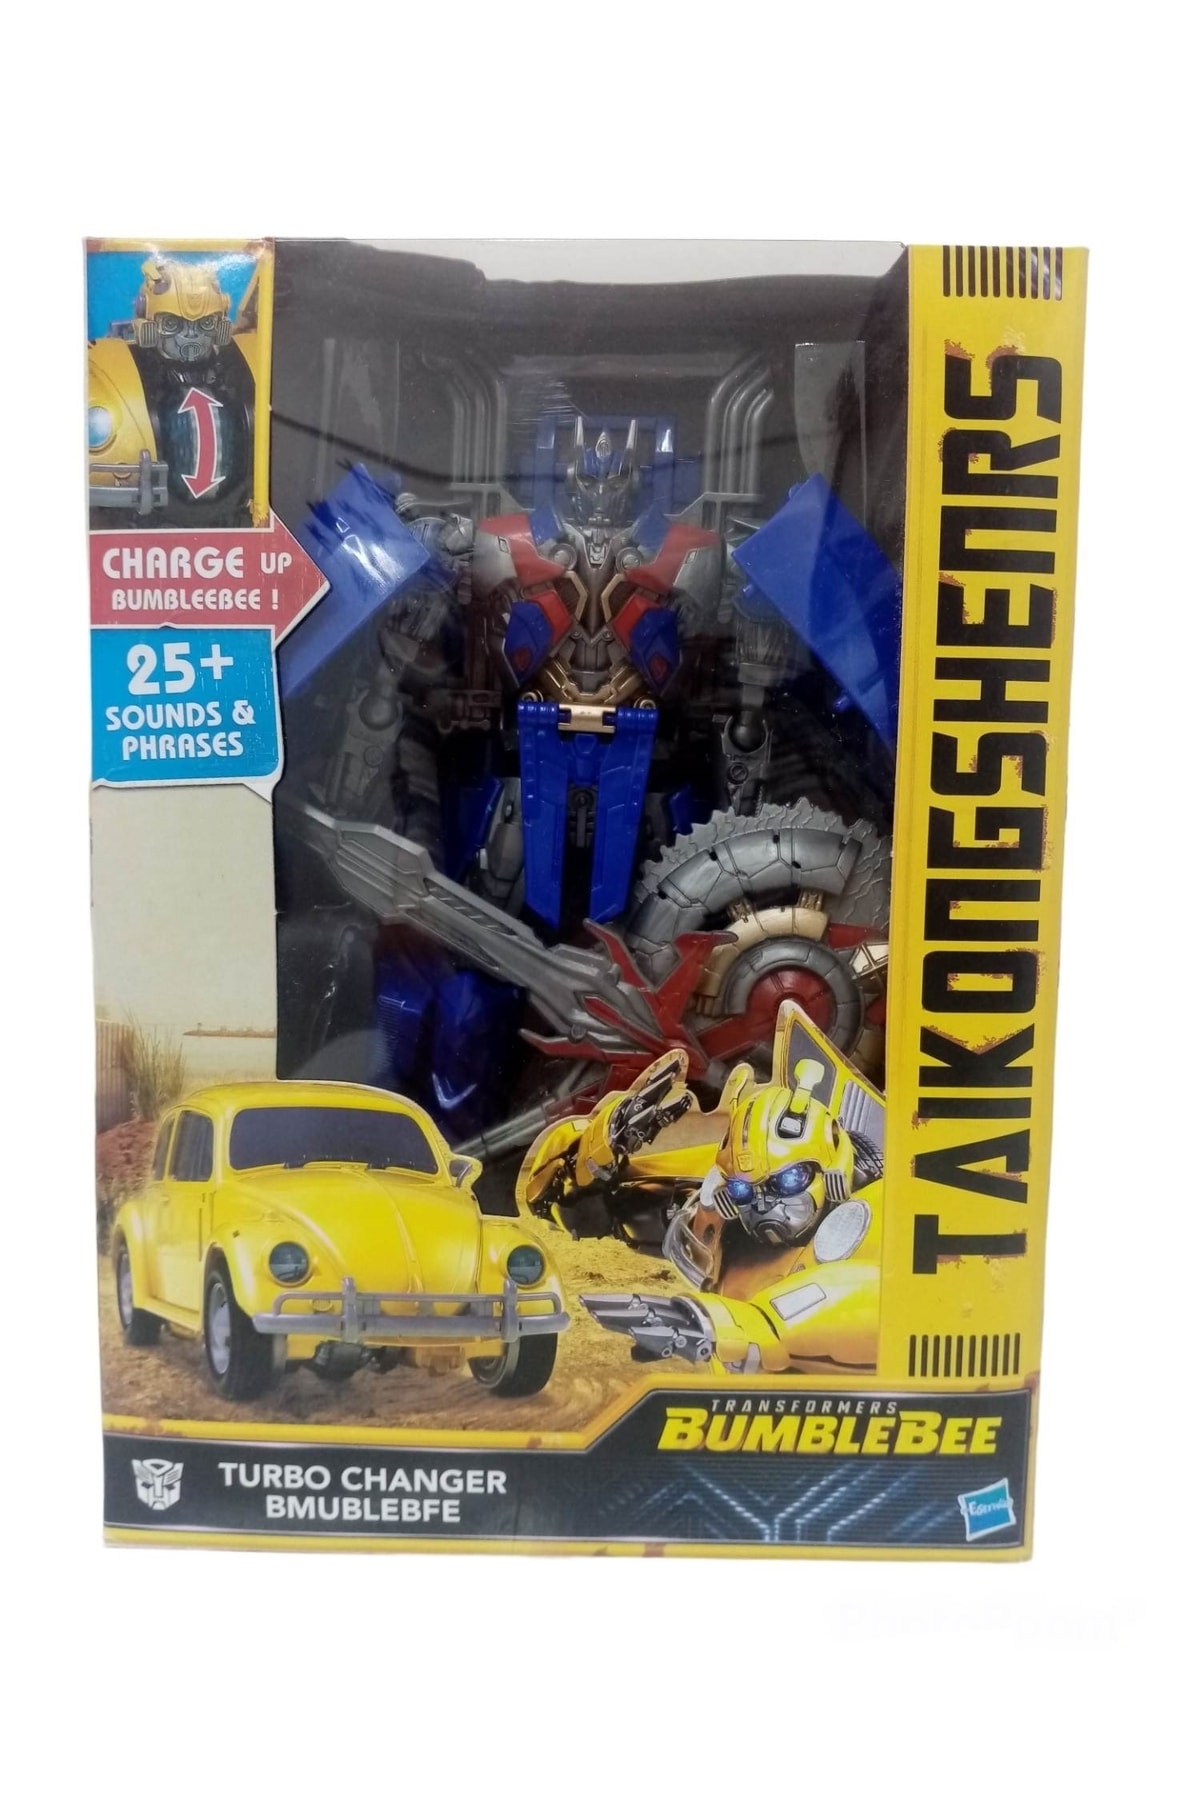 caglars Transformers Figür Oyuncak Araba Robot Bumblebee Figür